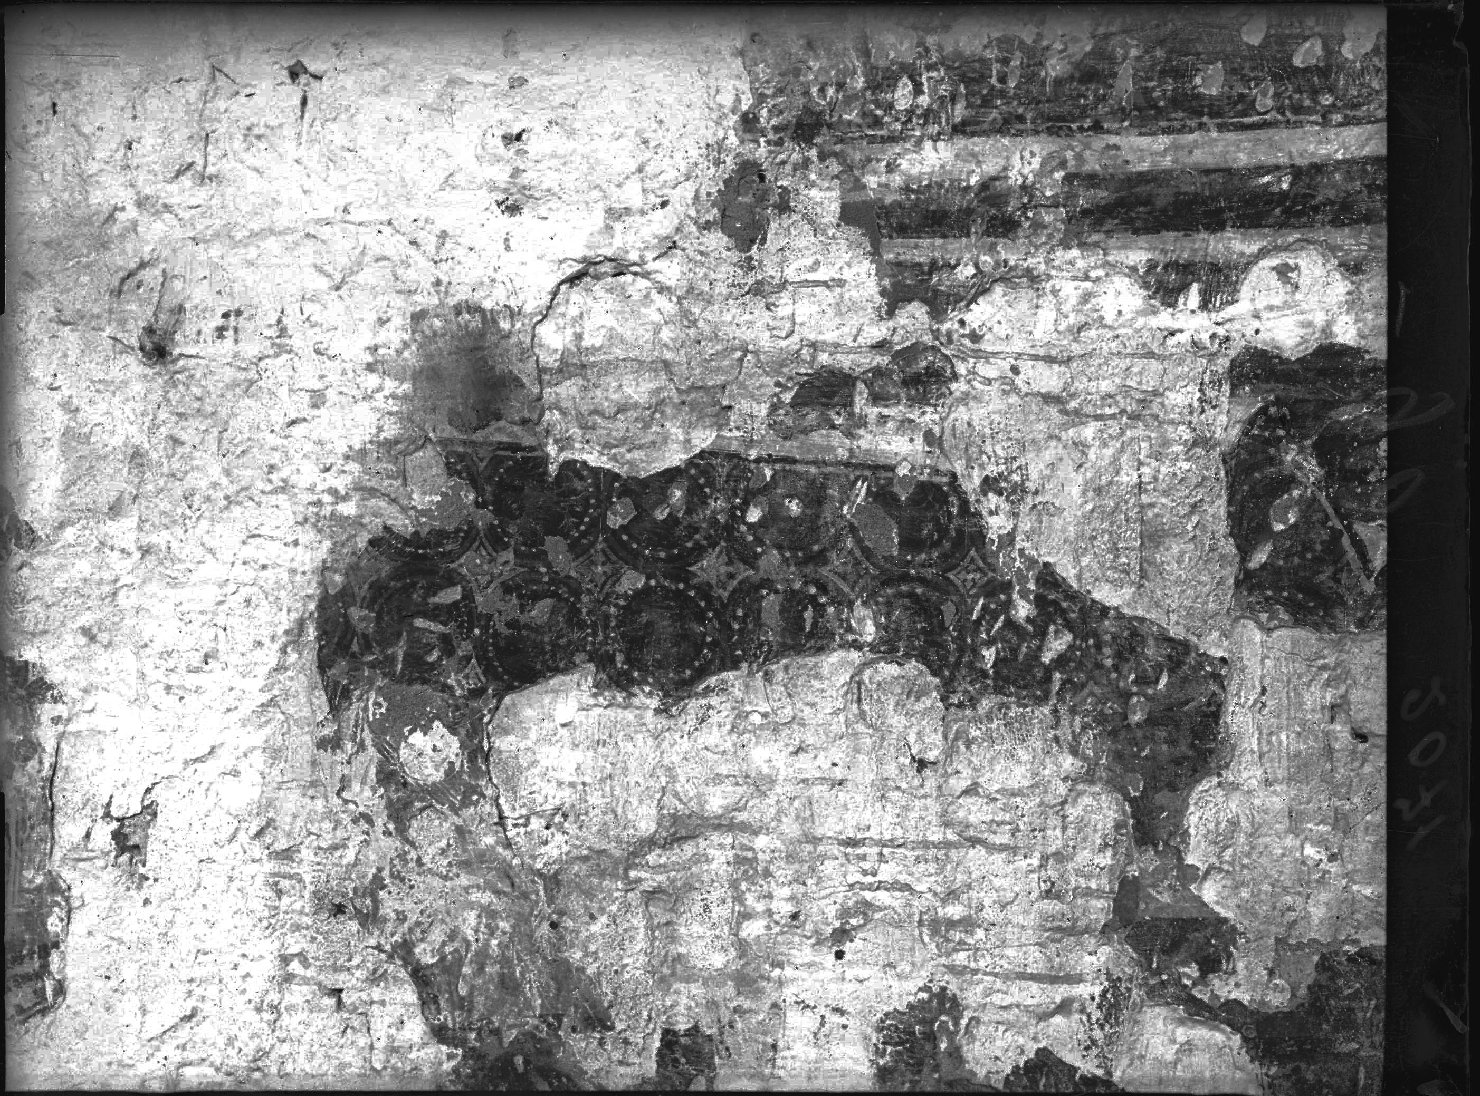 Mantova - Architetture - Dipinti murali - Restauri (negativo) di Anonimo - ambito veneto (XX)